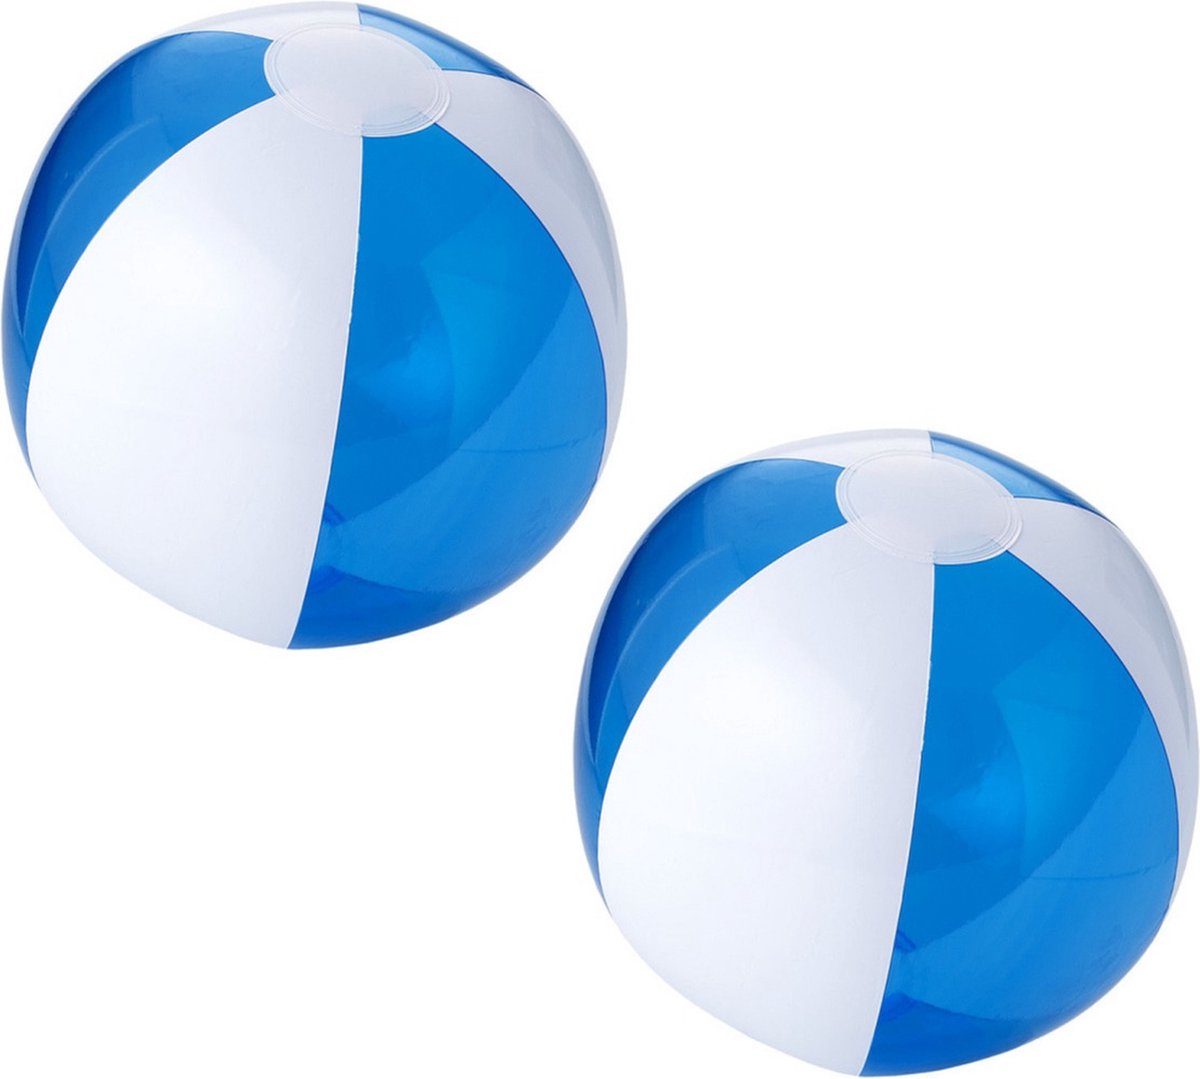 3x stuks opblaasbare strandballen blauw/wit 30 cm - Buitenspeelgoed waterspeelgoed opblaasbaar